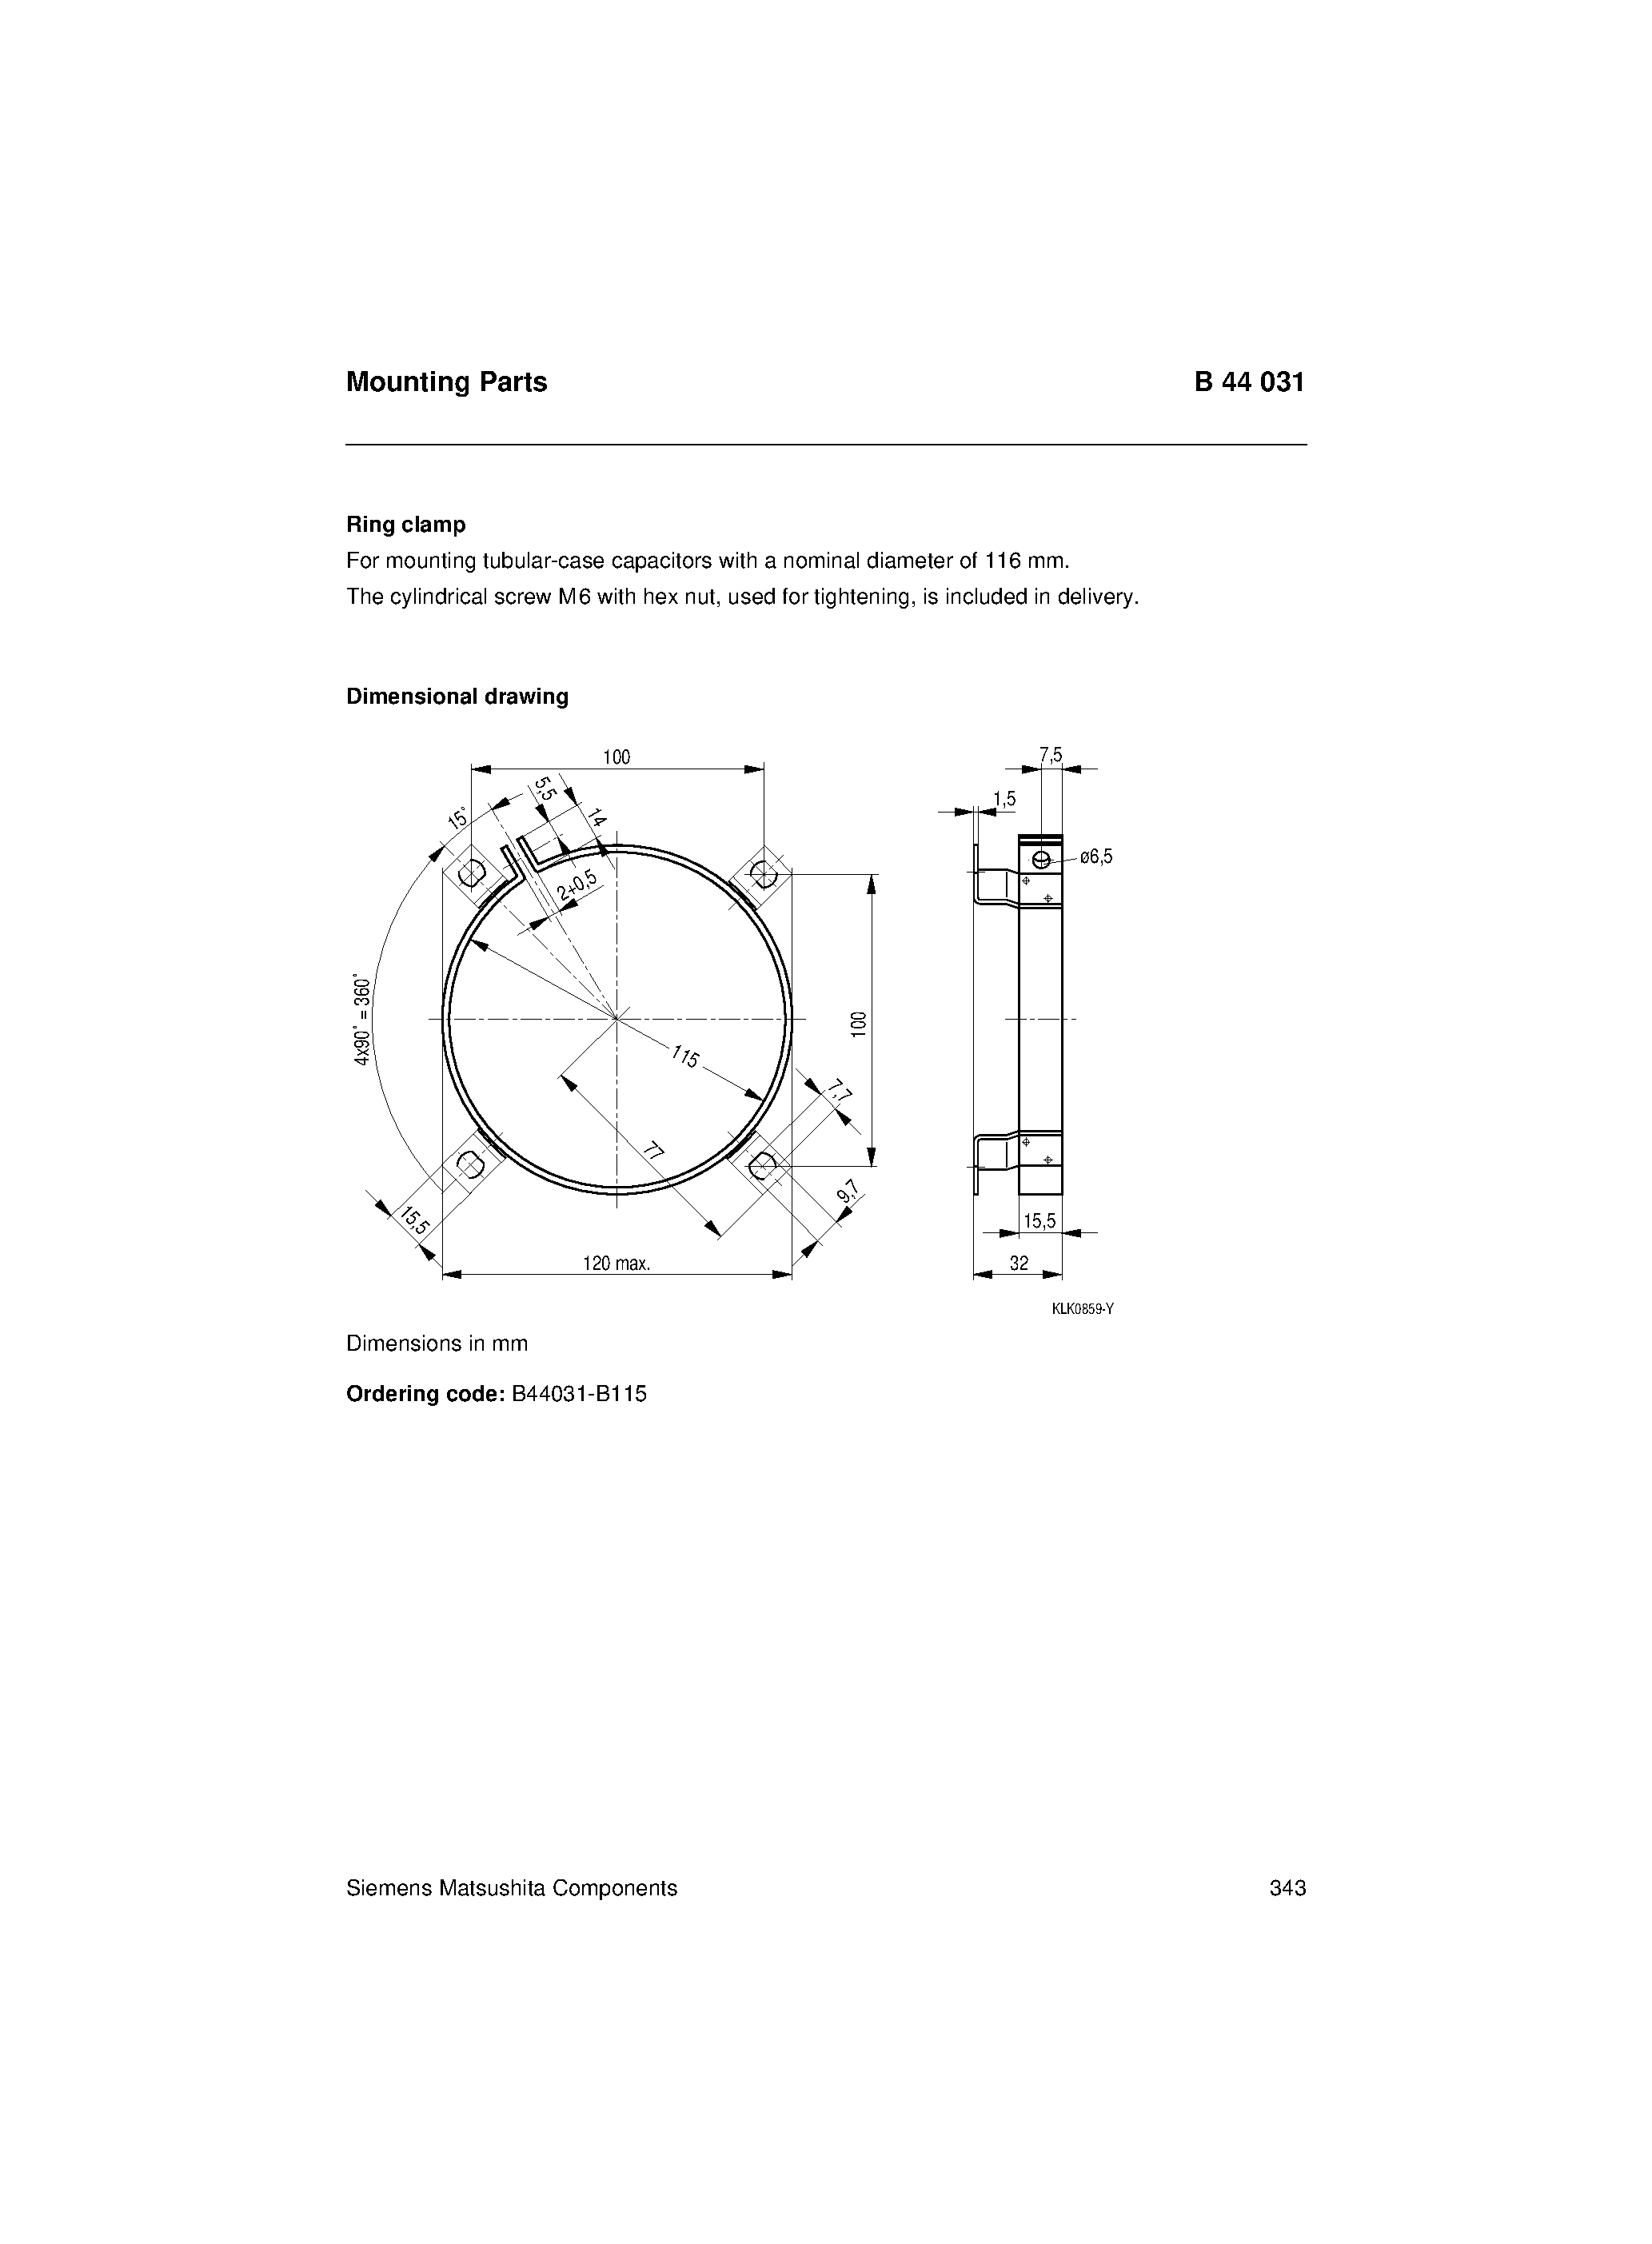 Даташит B44031 - Mounting Parts страница 1